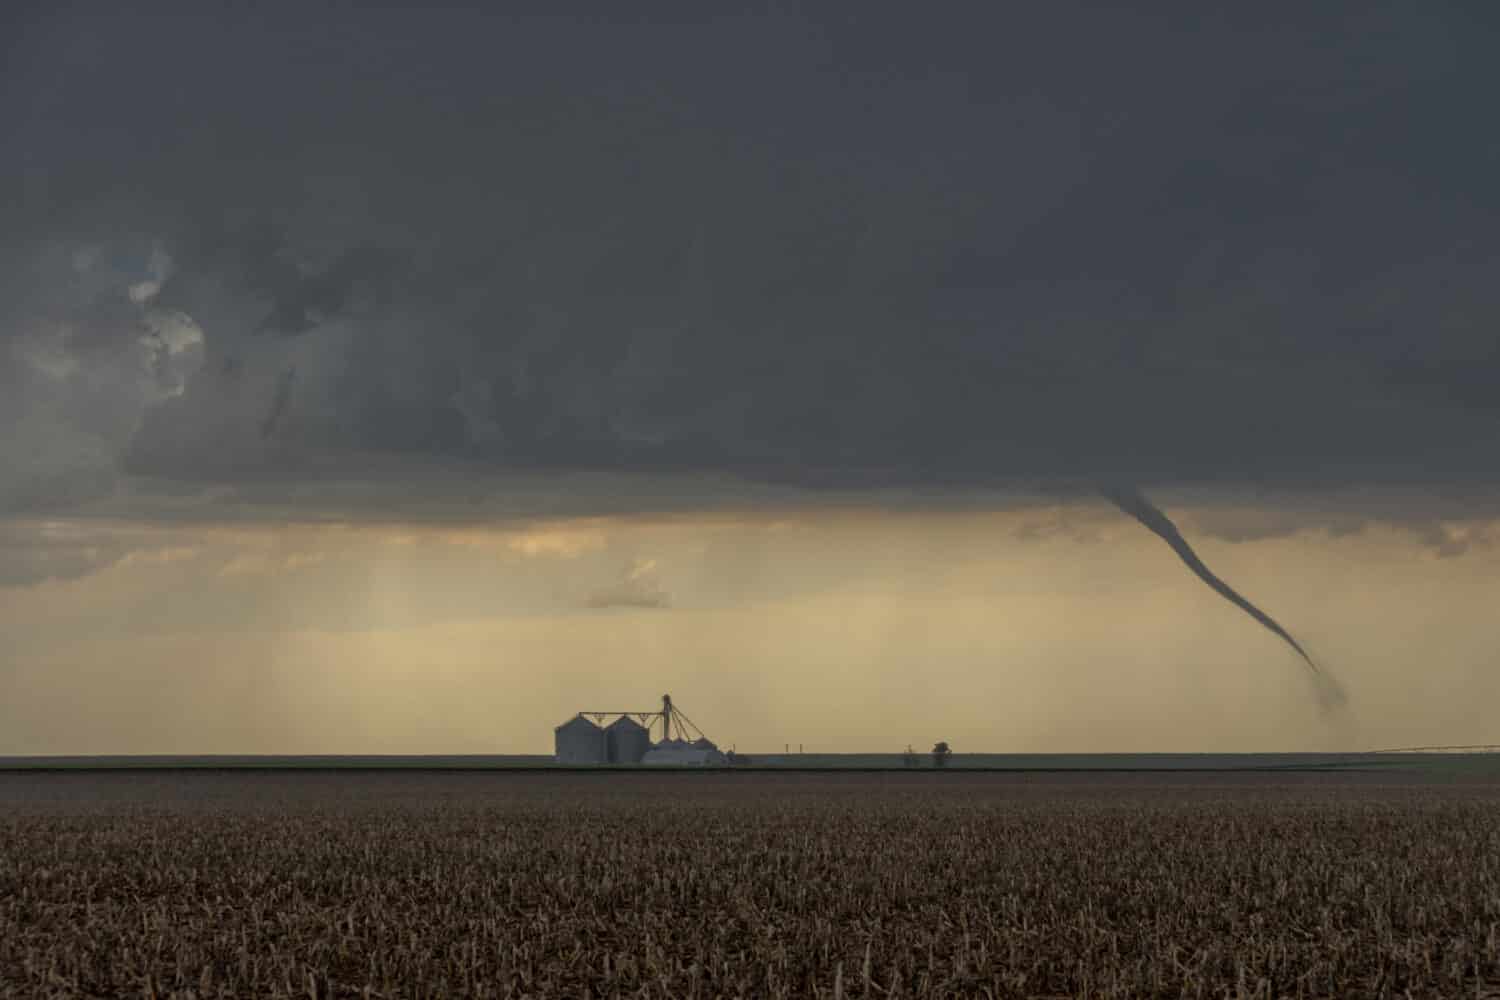 St Francis, Kansas, USA - June 29th, 2019: Tornado next to a silo